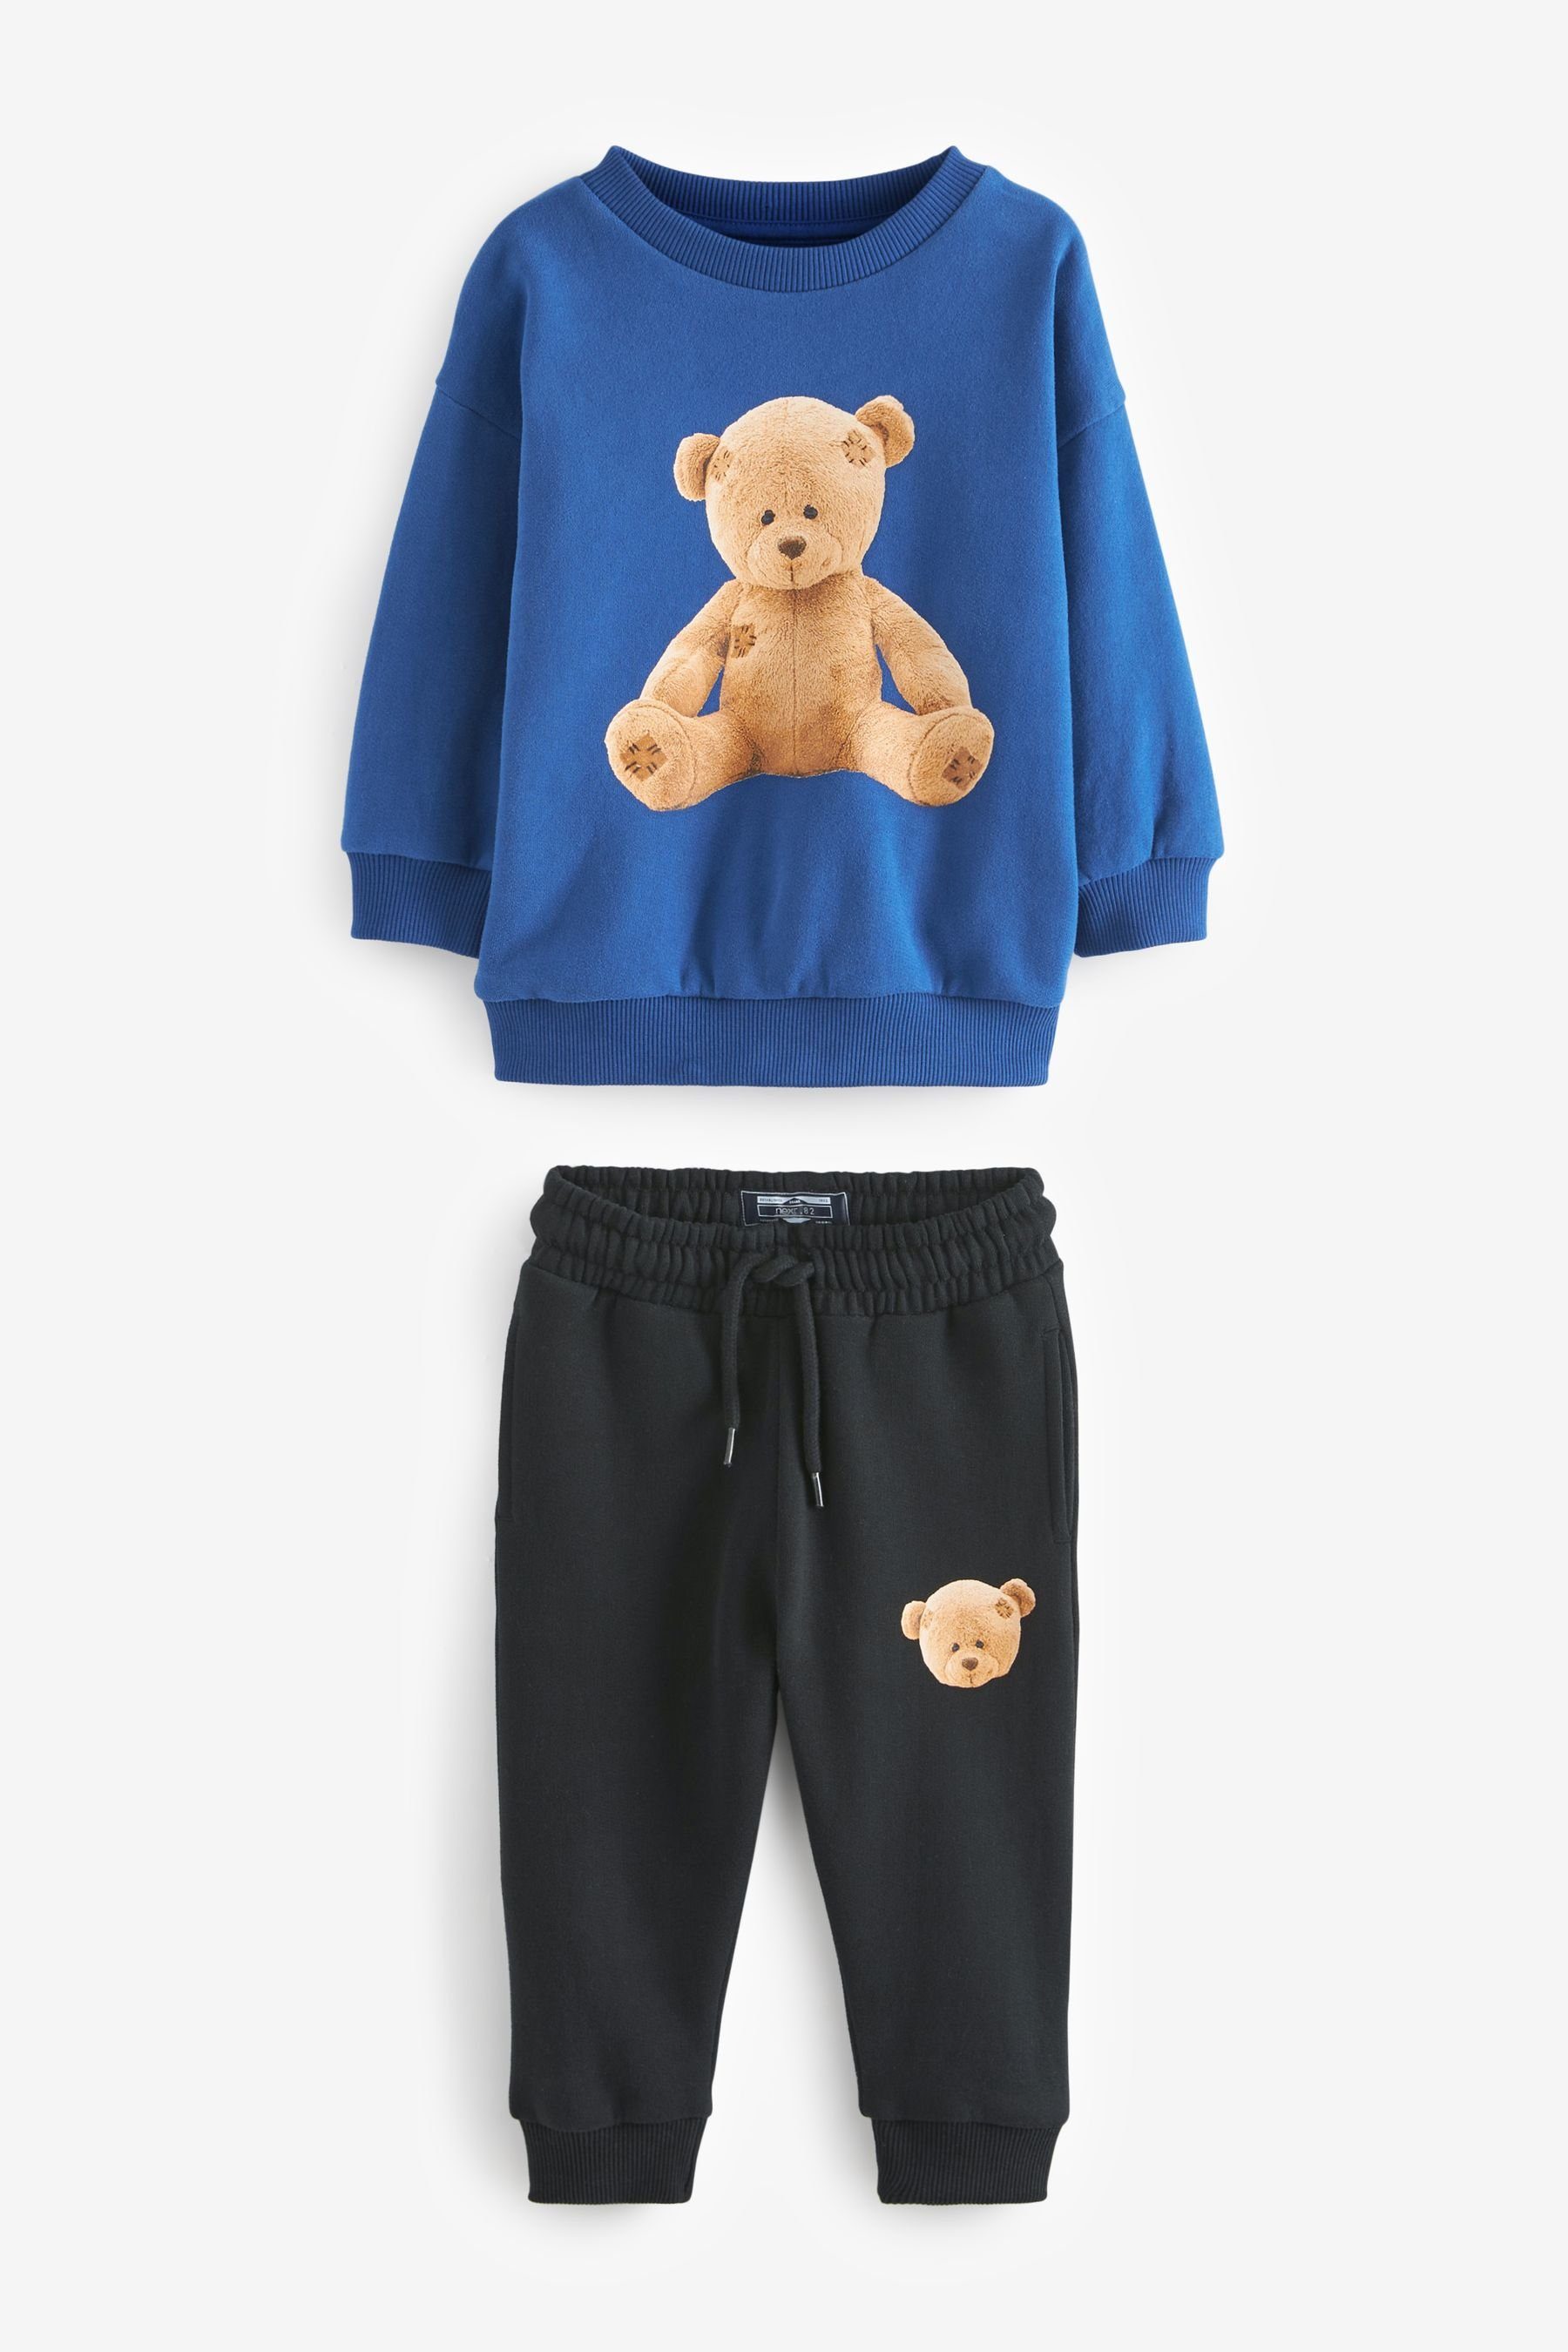 Next Sweatanzug Sweatshirt mit (2-tlg) Blue Bear Set Jogginghose und im Motiv